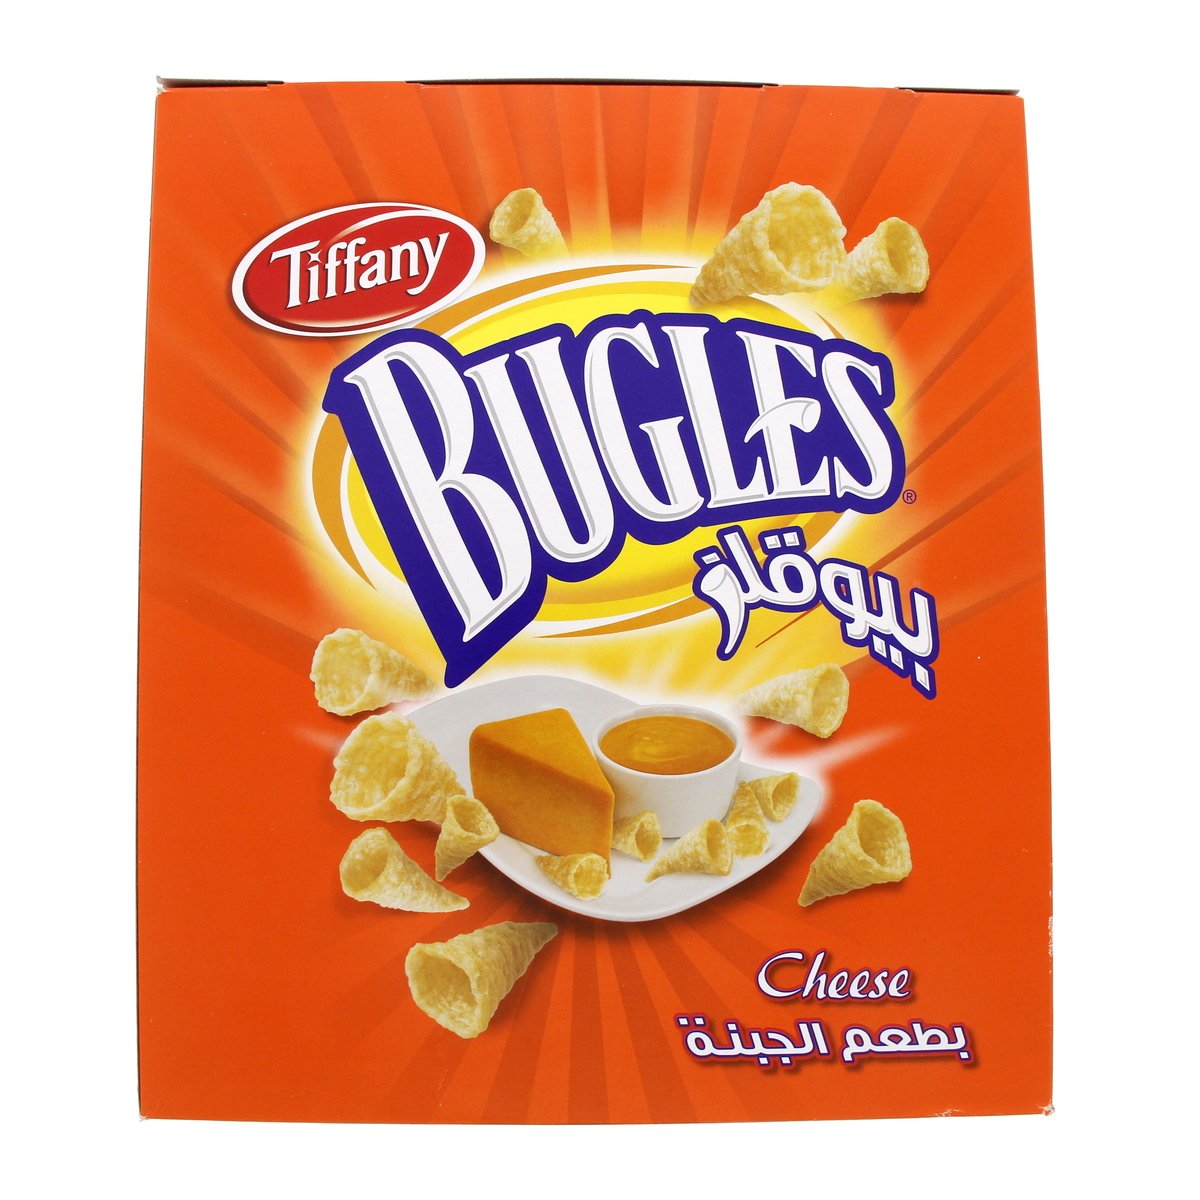 Tiffany Bugles Cheese 12 x 25 g